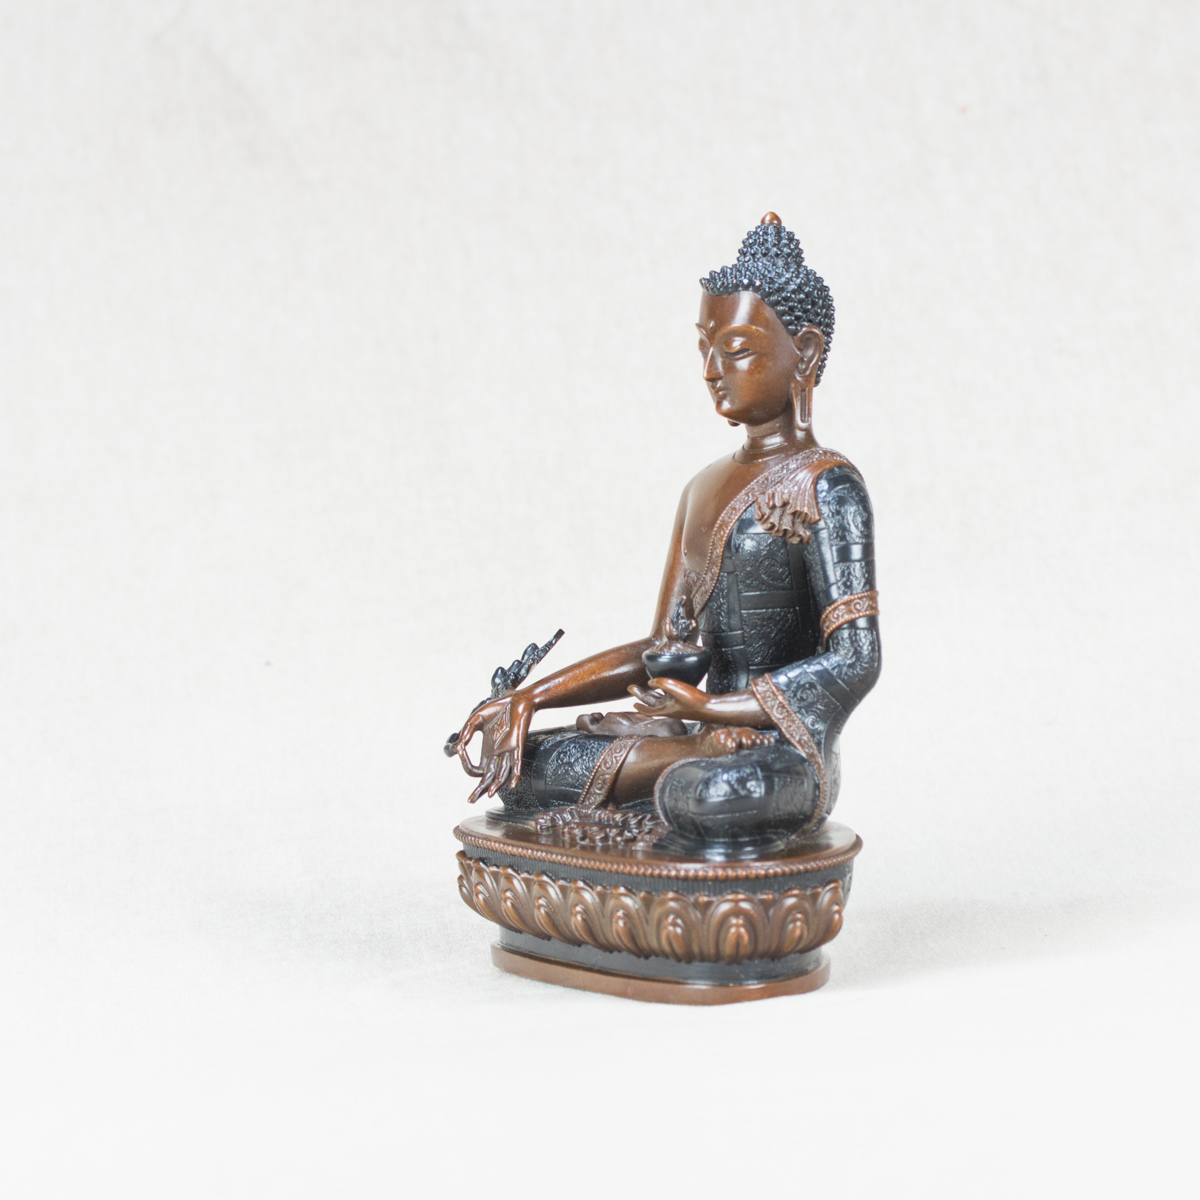 Статуэтка Будды Медицины, 16,5 см (discounted)